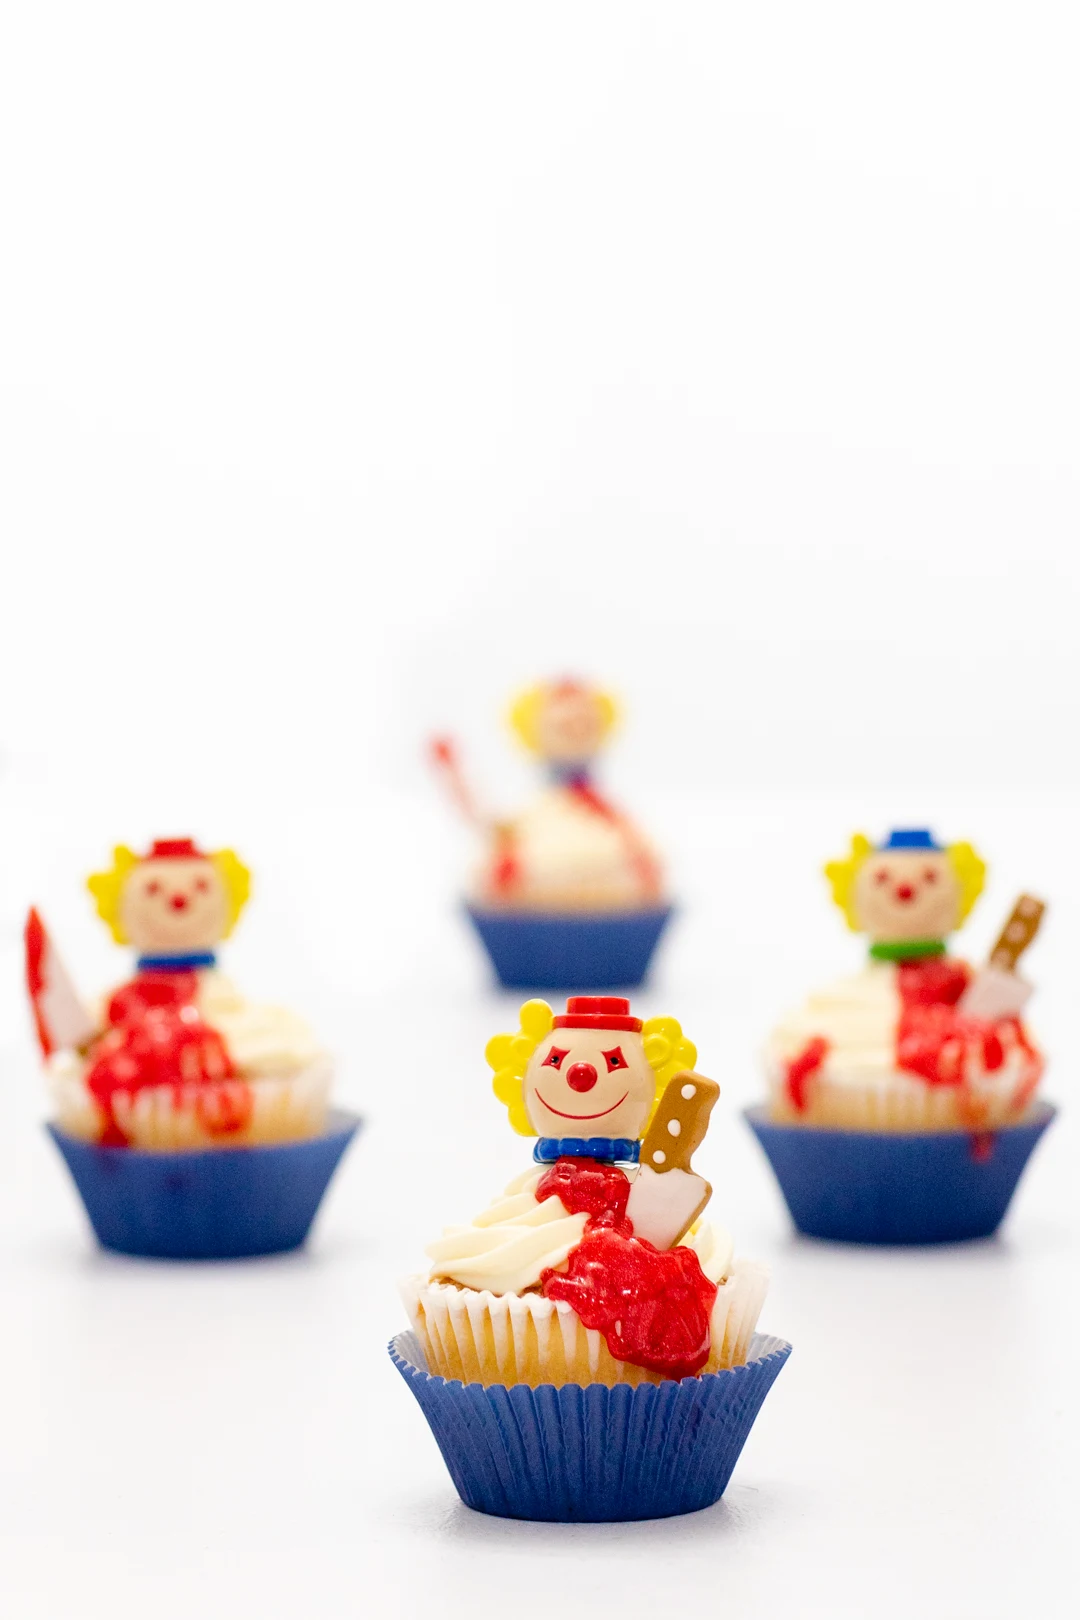 Killer Clown Cupcakes. Perfect for Halloween.